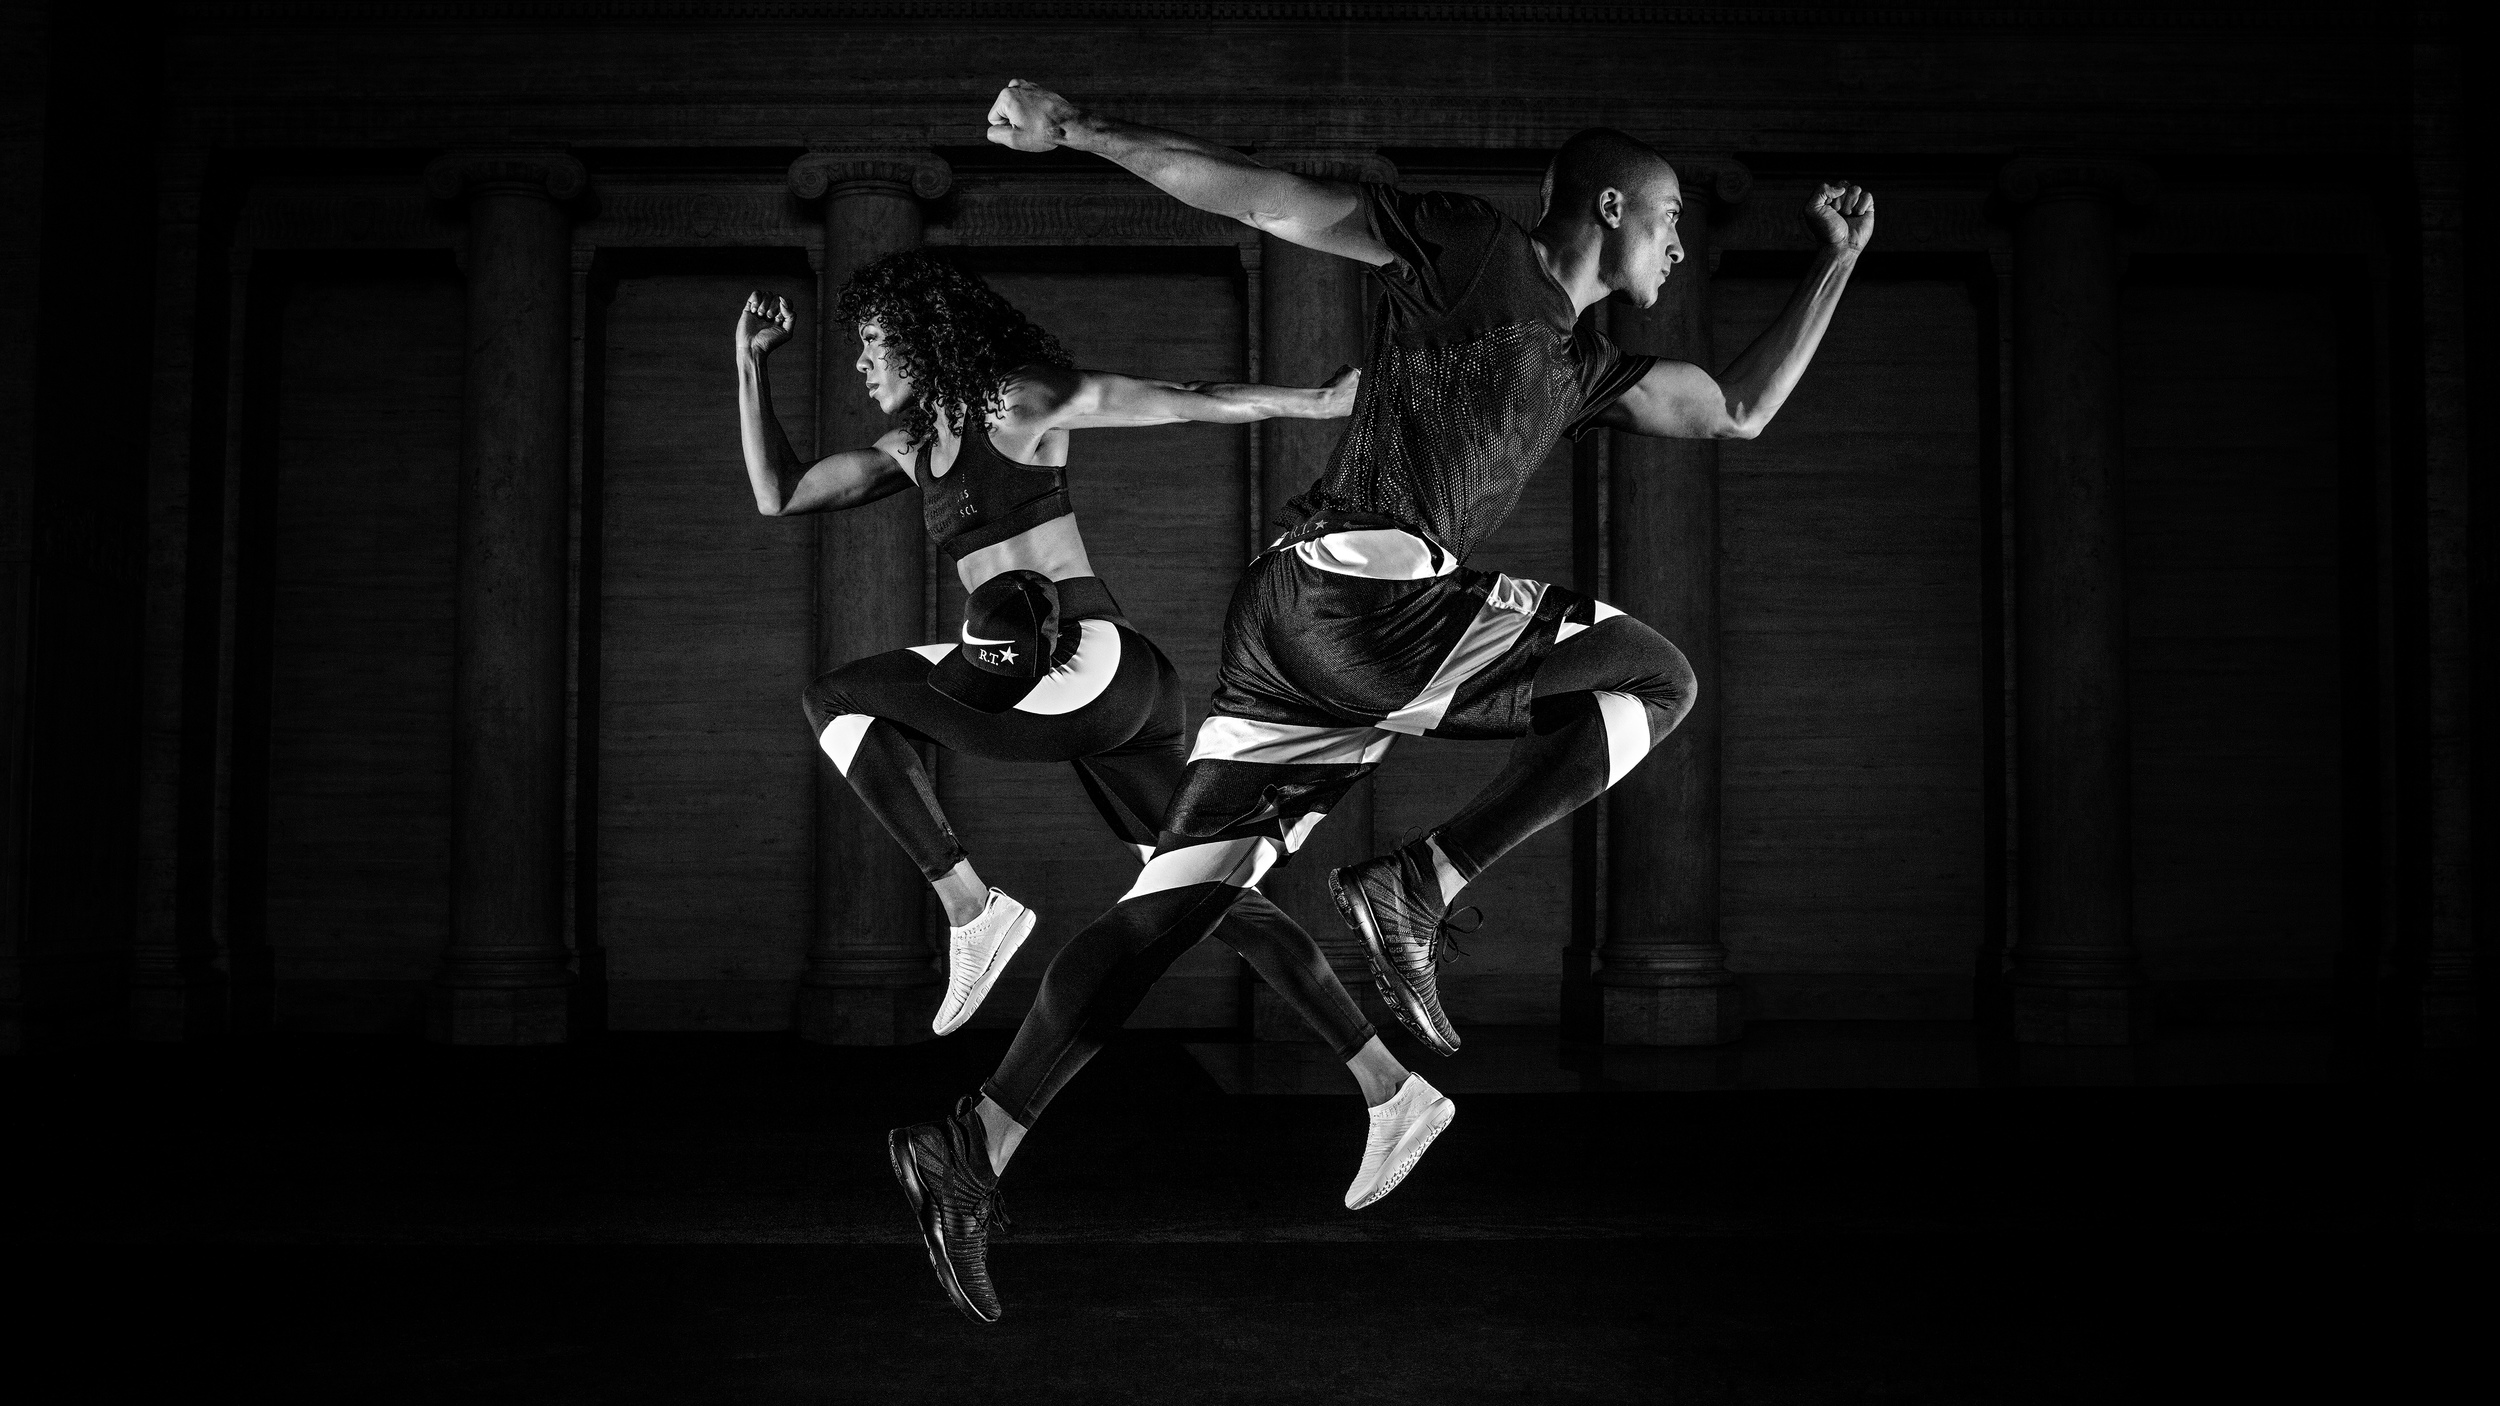 NikeLabxRT_Training_Redefined_2_54856.jpg